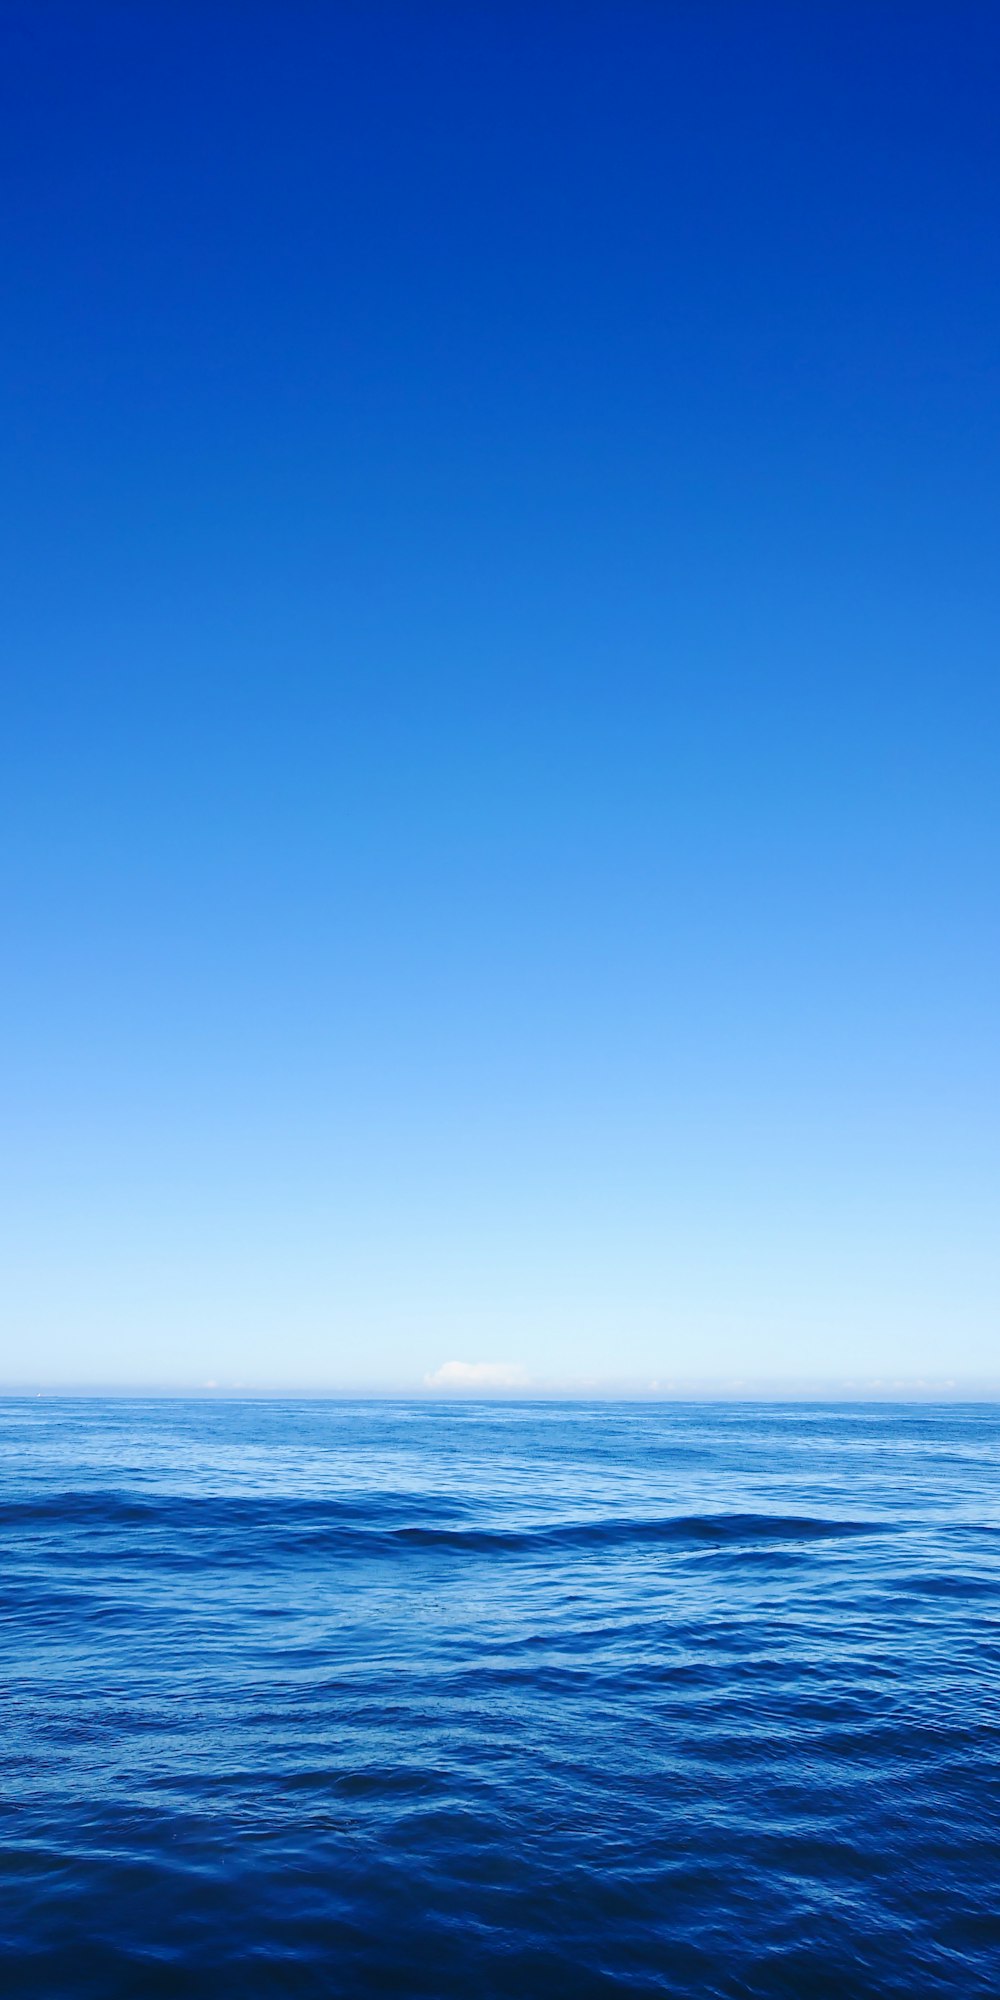 ocean water under clear blue sky